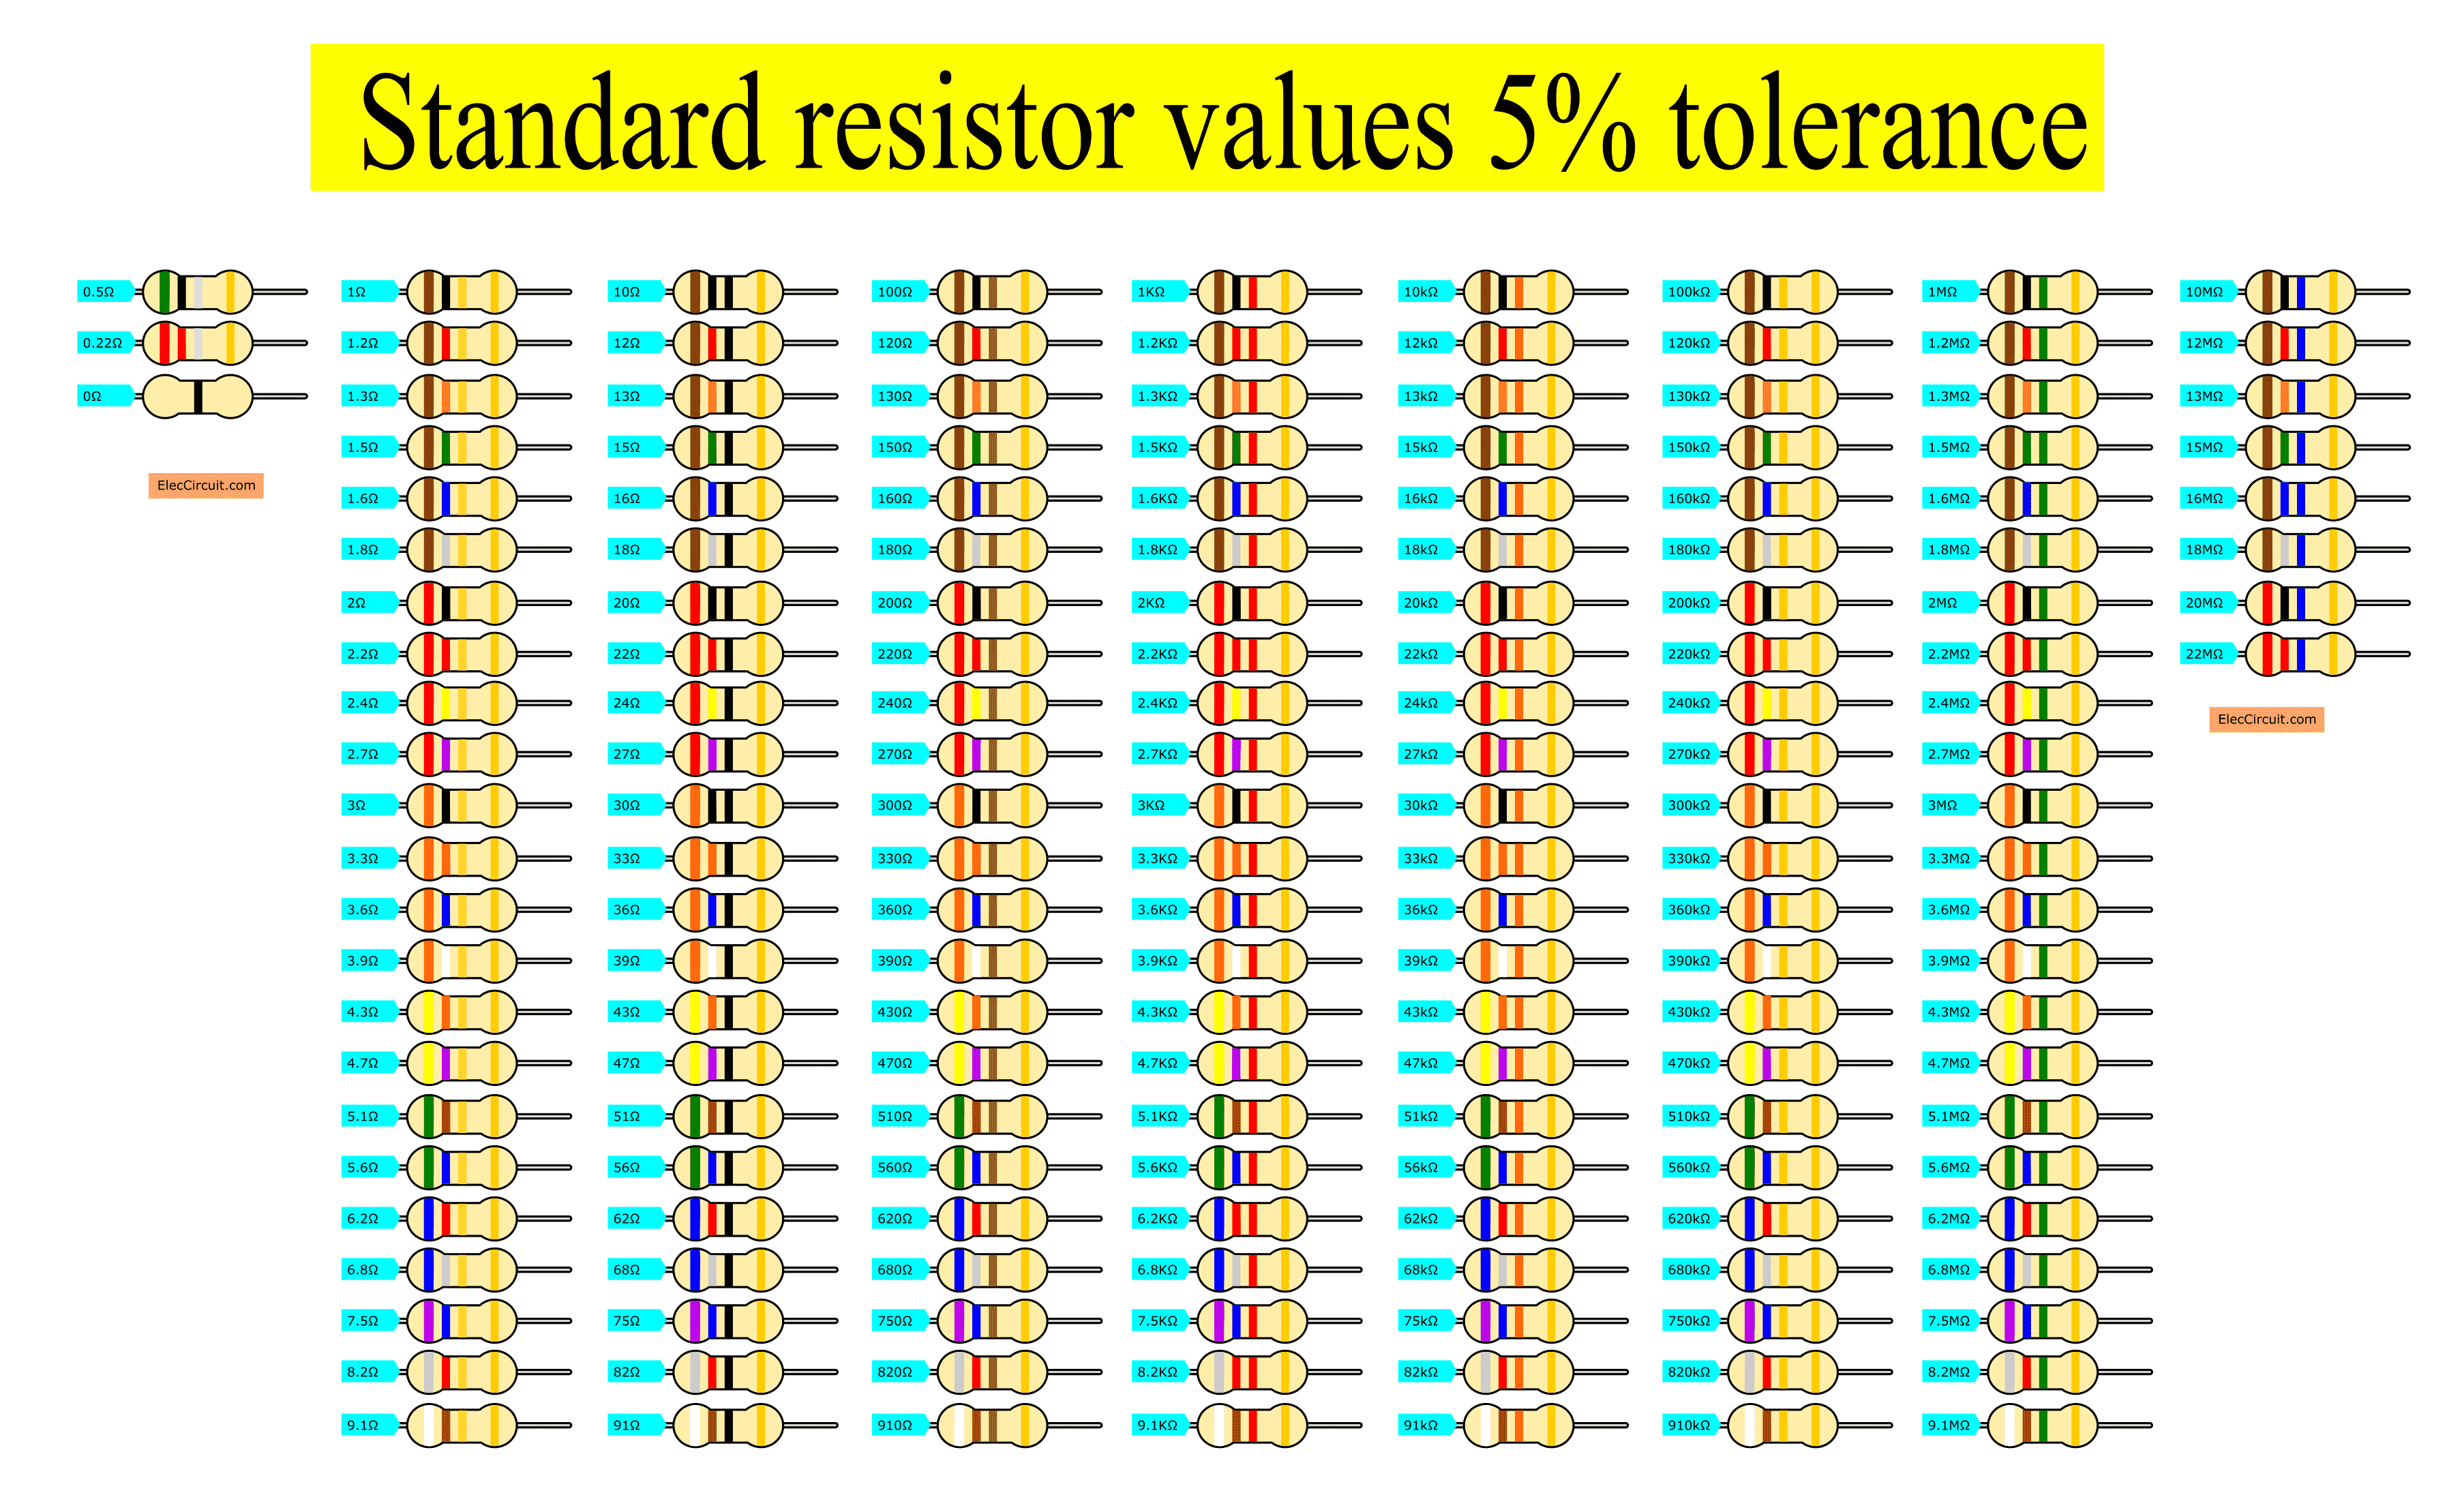 Standard resistor values 5% tolerance.